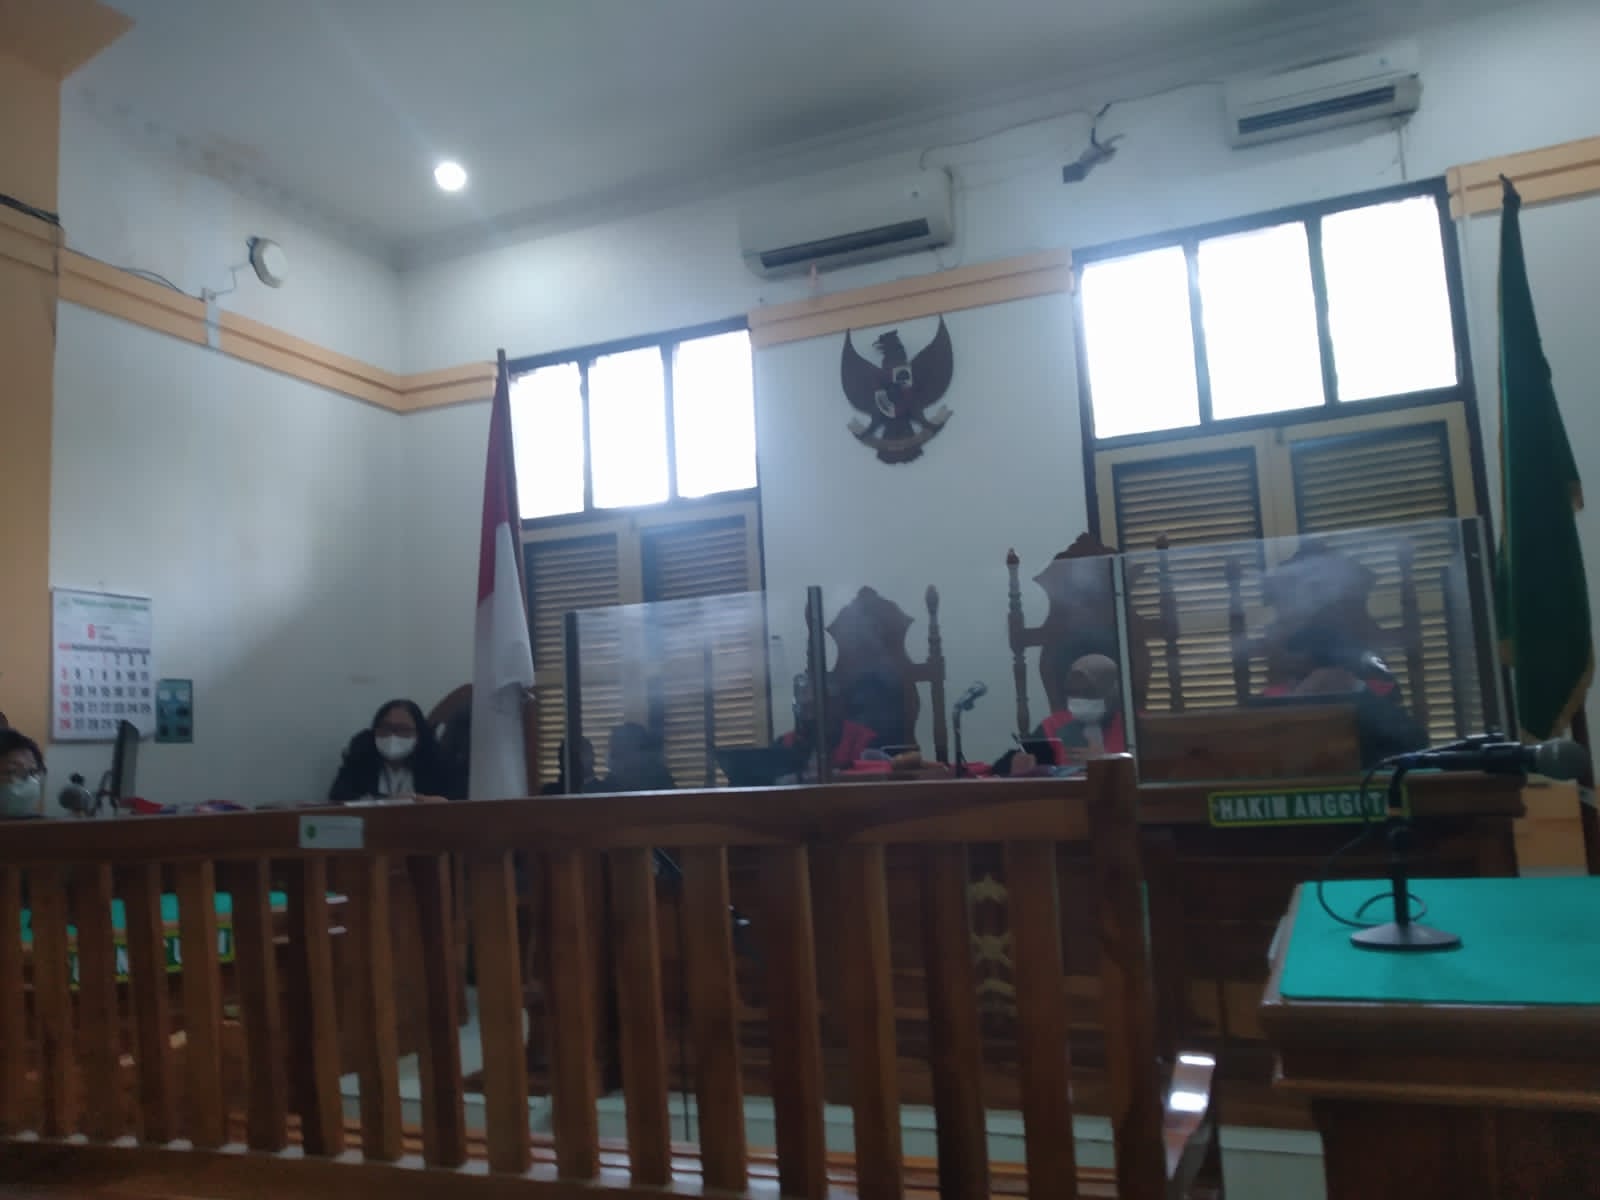 Kendalikan 5000 Ekstasi, Edy Syahputra Napi Tanjung Gusta Divonis 18 Tahun Penjara